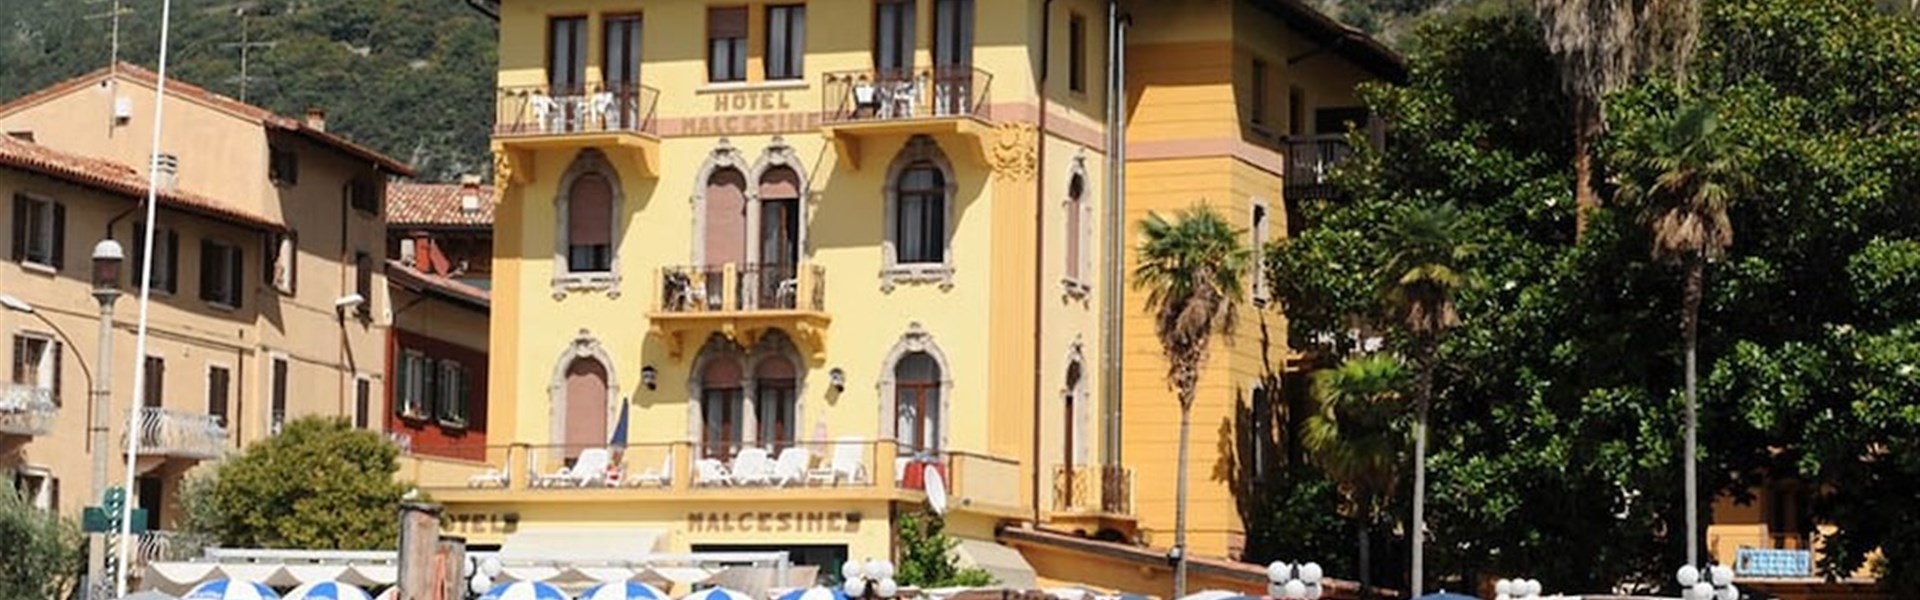 Marco Polo - Hotel Malcesine - 